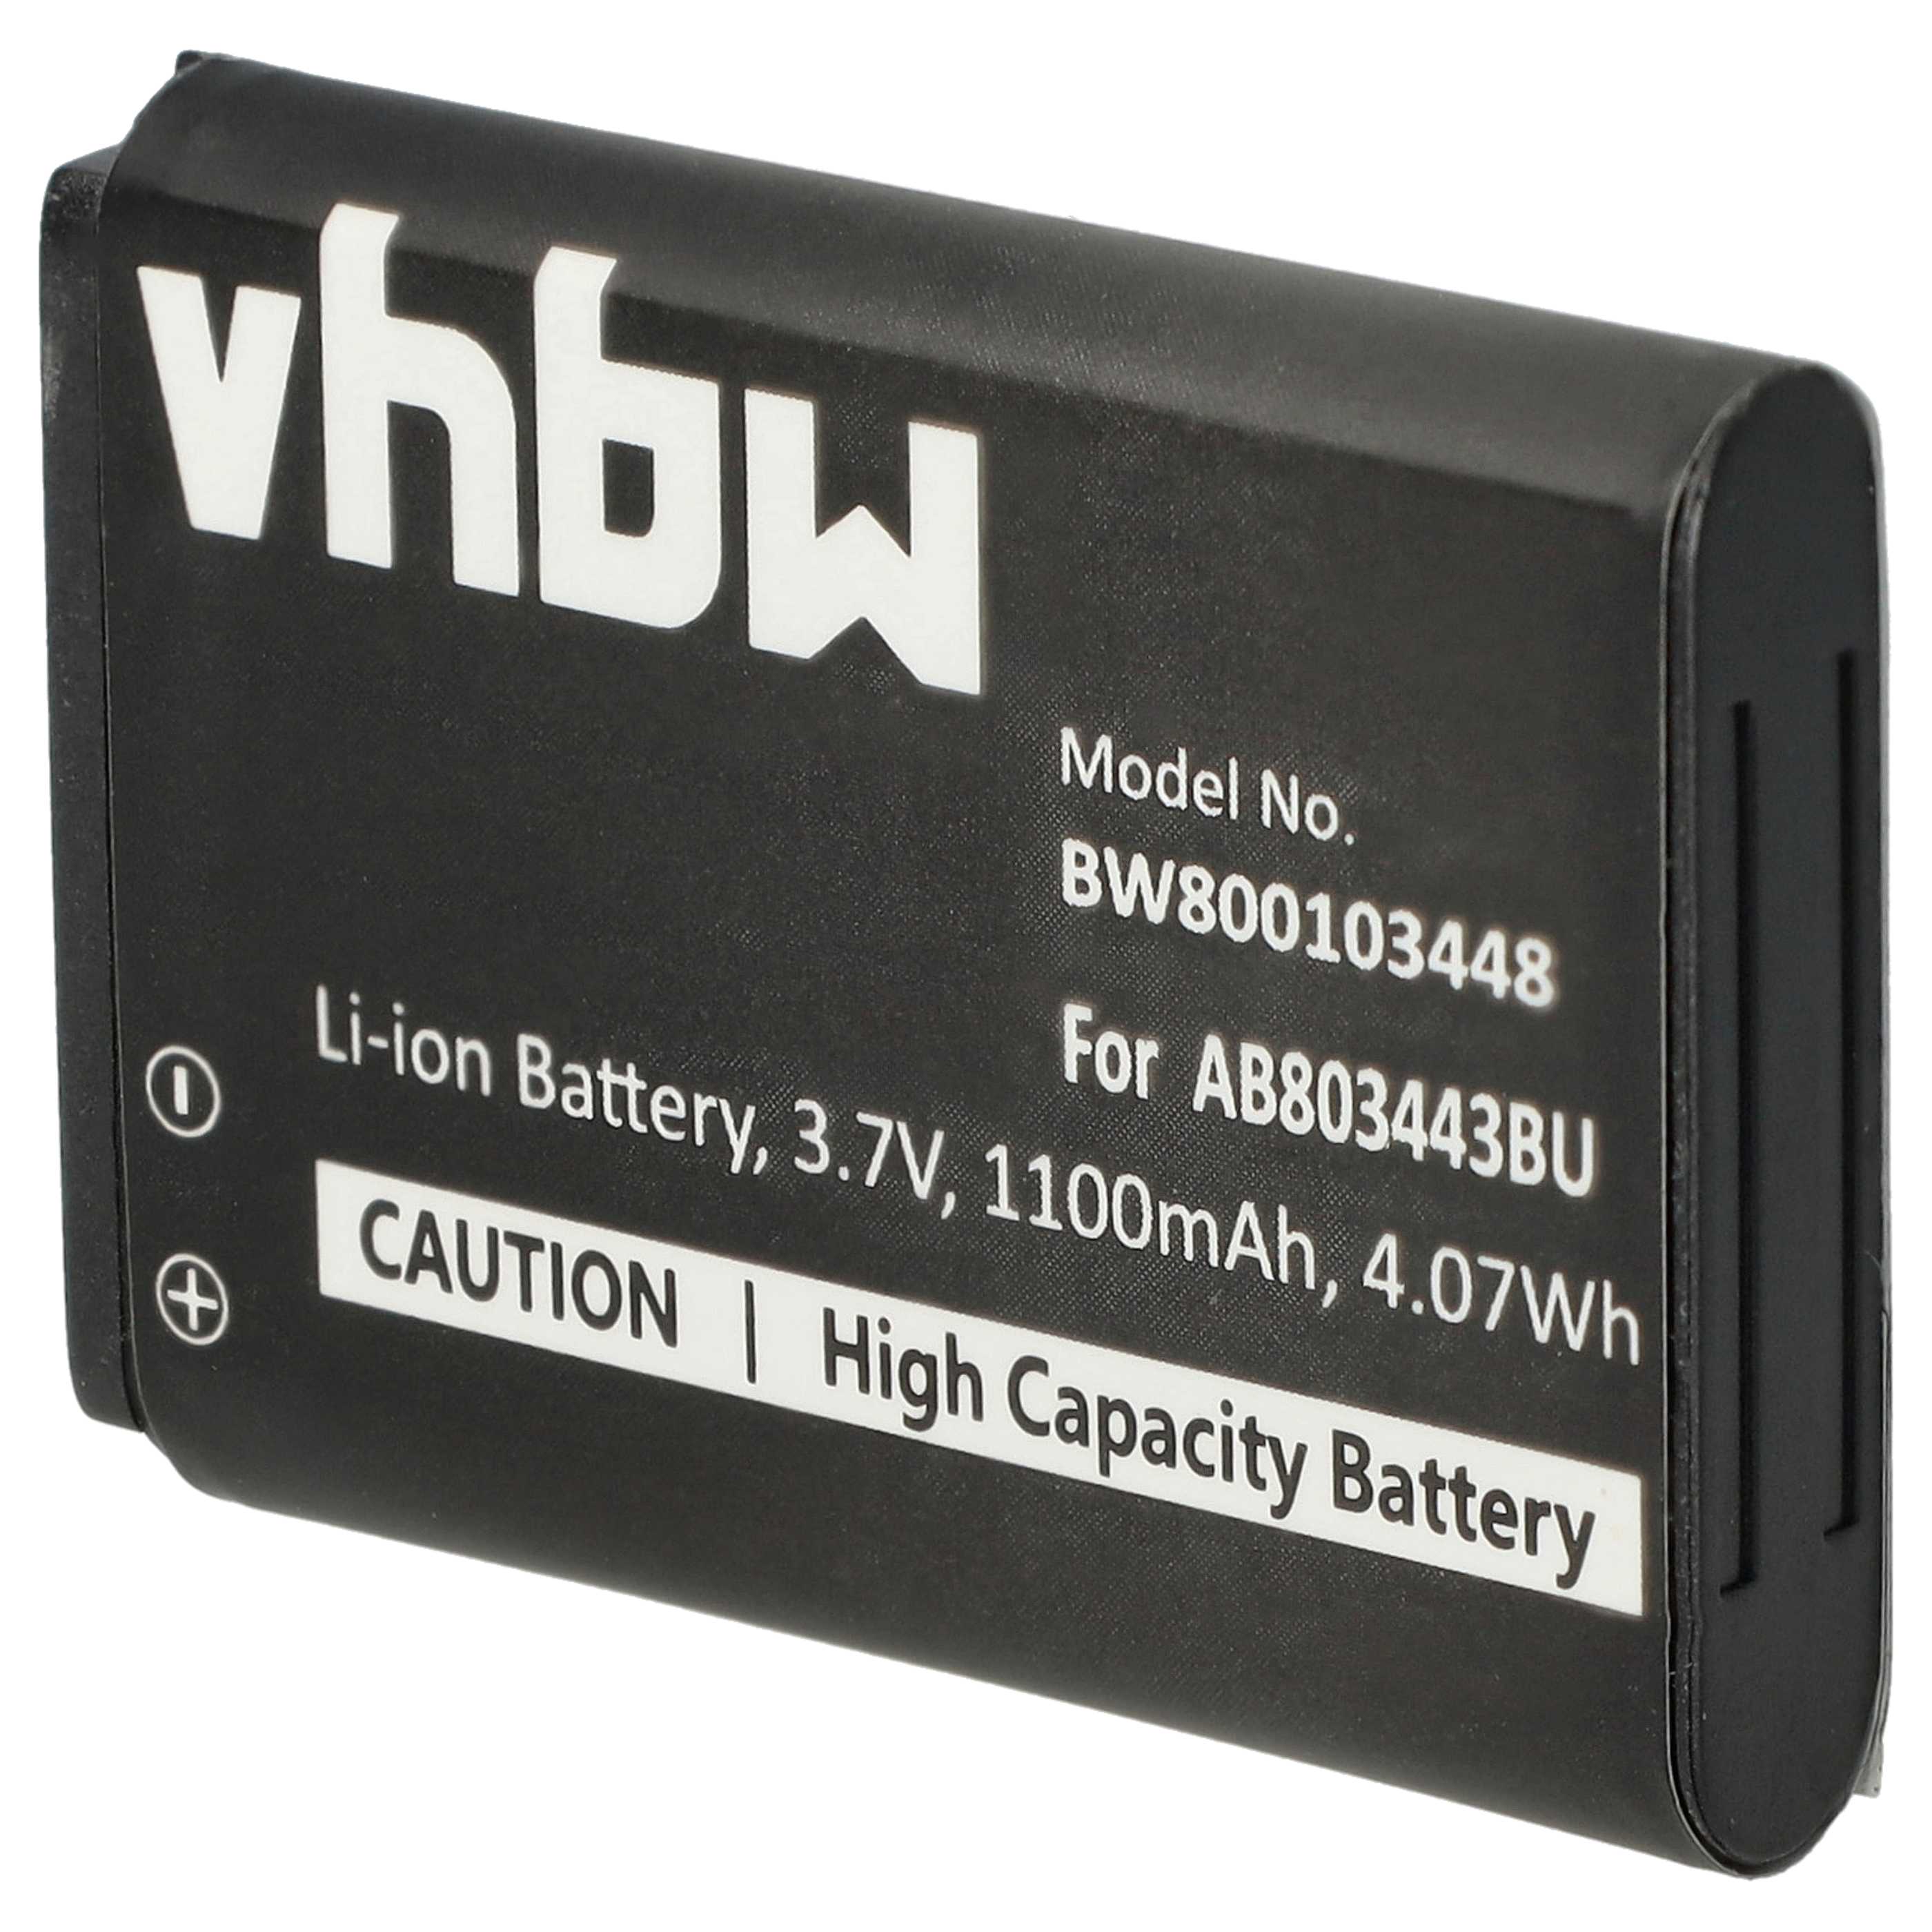 Akumulator bateria do telefonu smartfona zam. Samsung AB803443BU - 1100mAh, 3,7V, Li-Ion